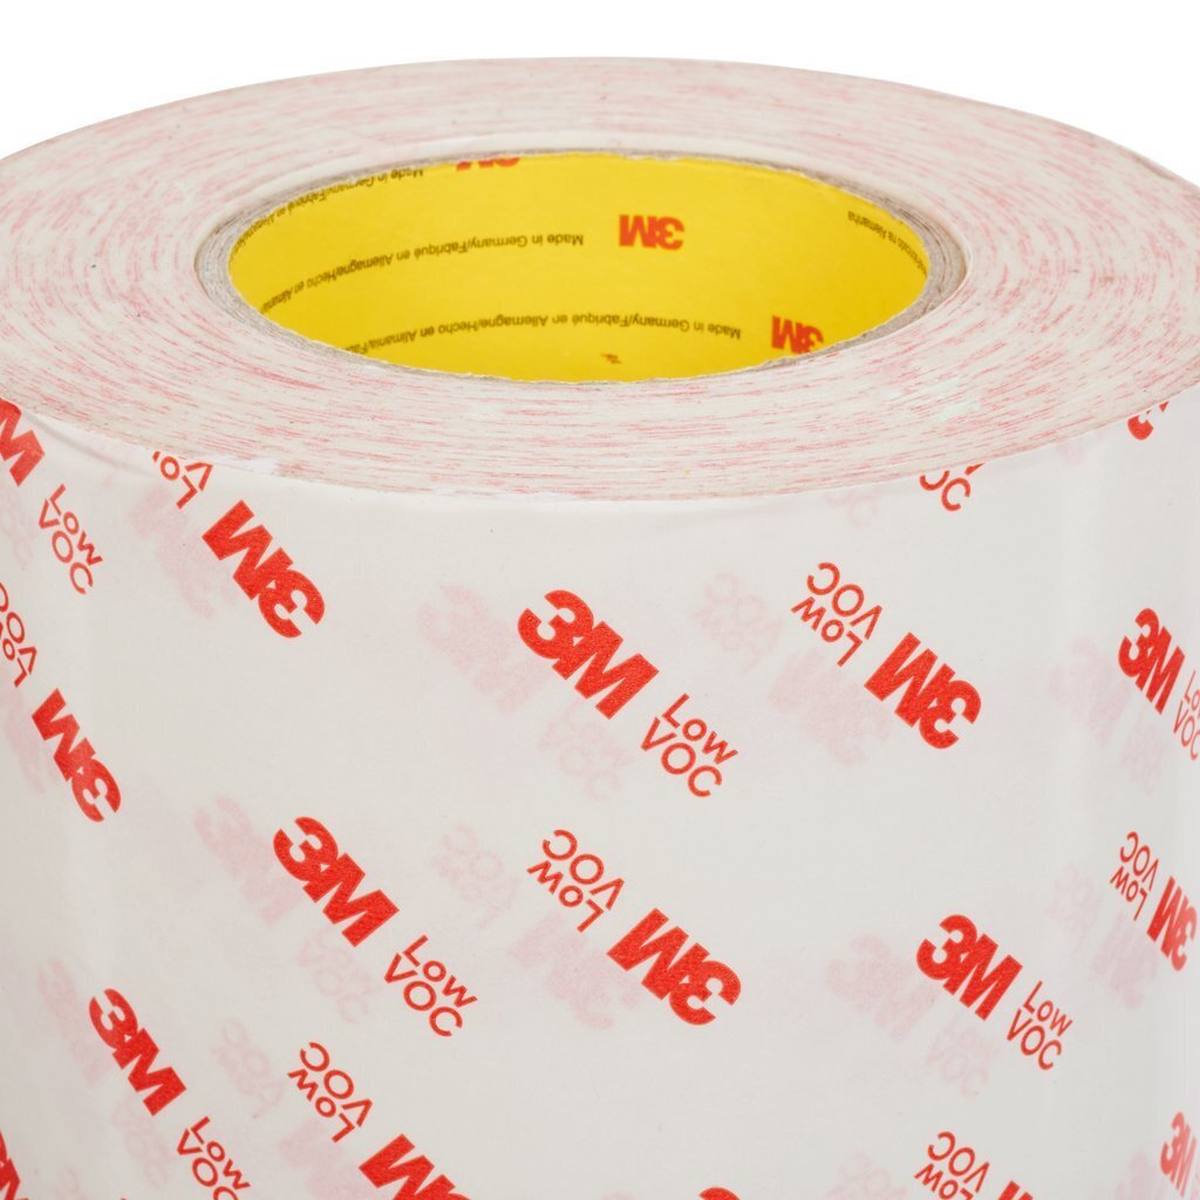 3M Dubbelzijdig plakband met vliespapier als rug 99015LVC, wit, 38 mm x 50 m, 0,15 mm